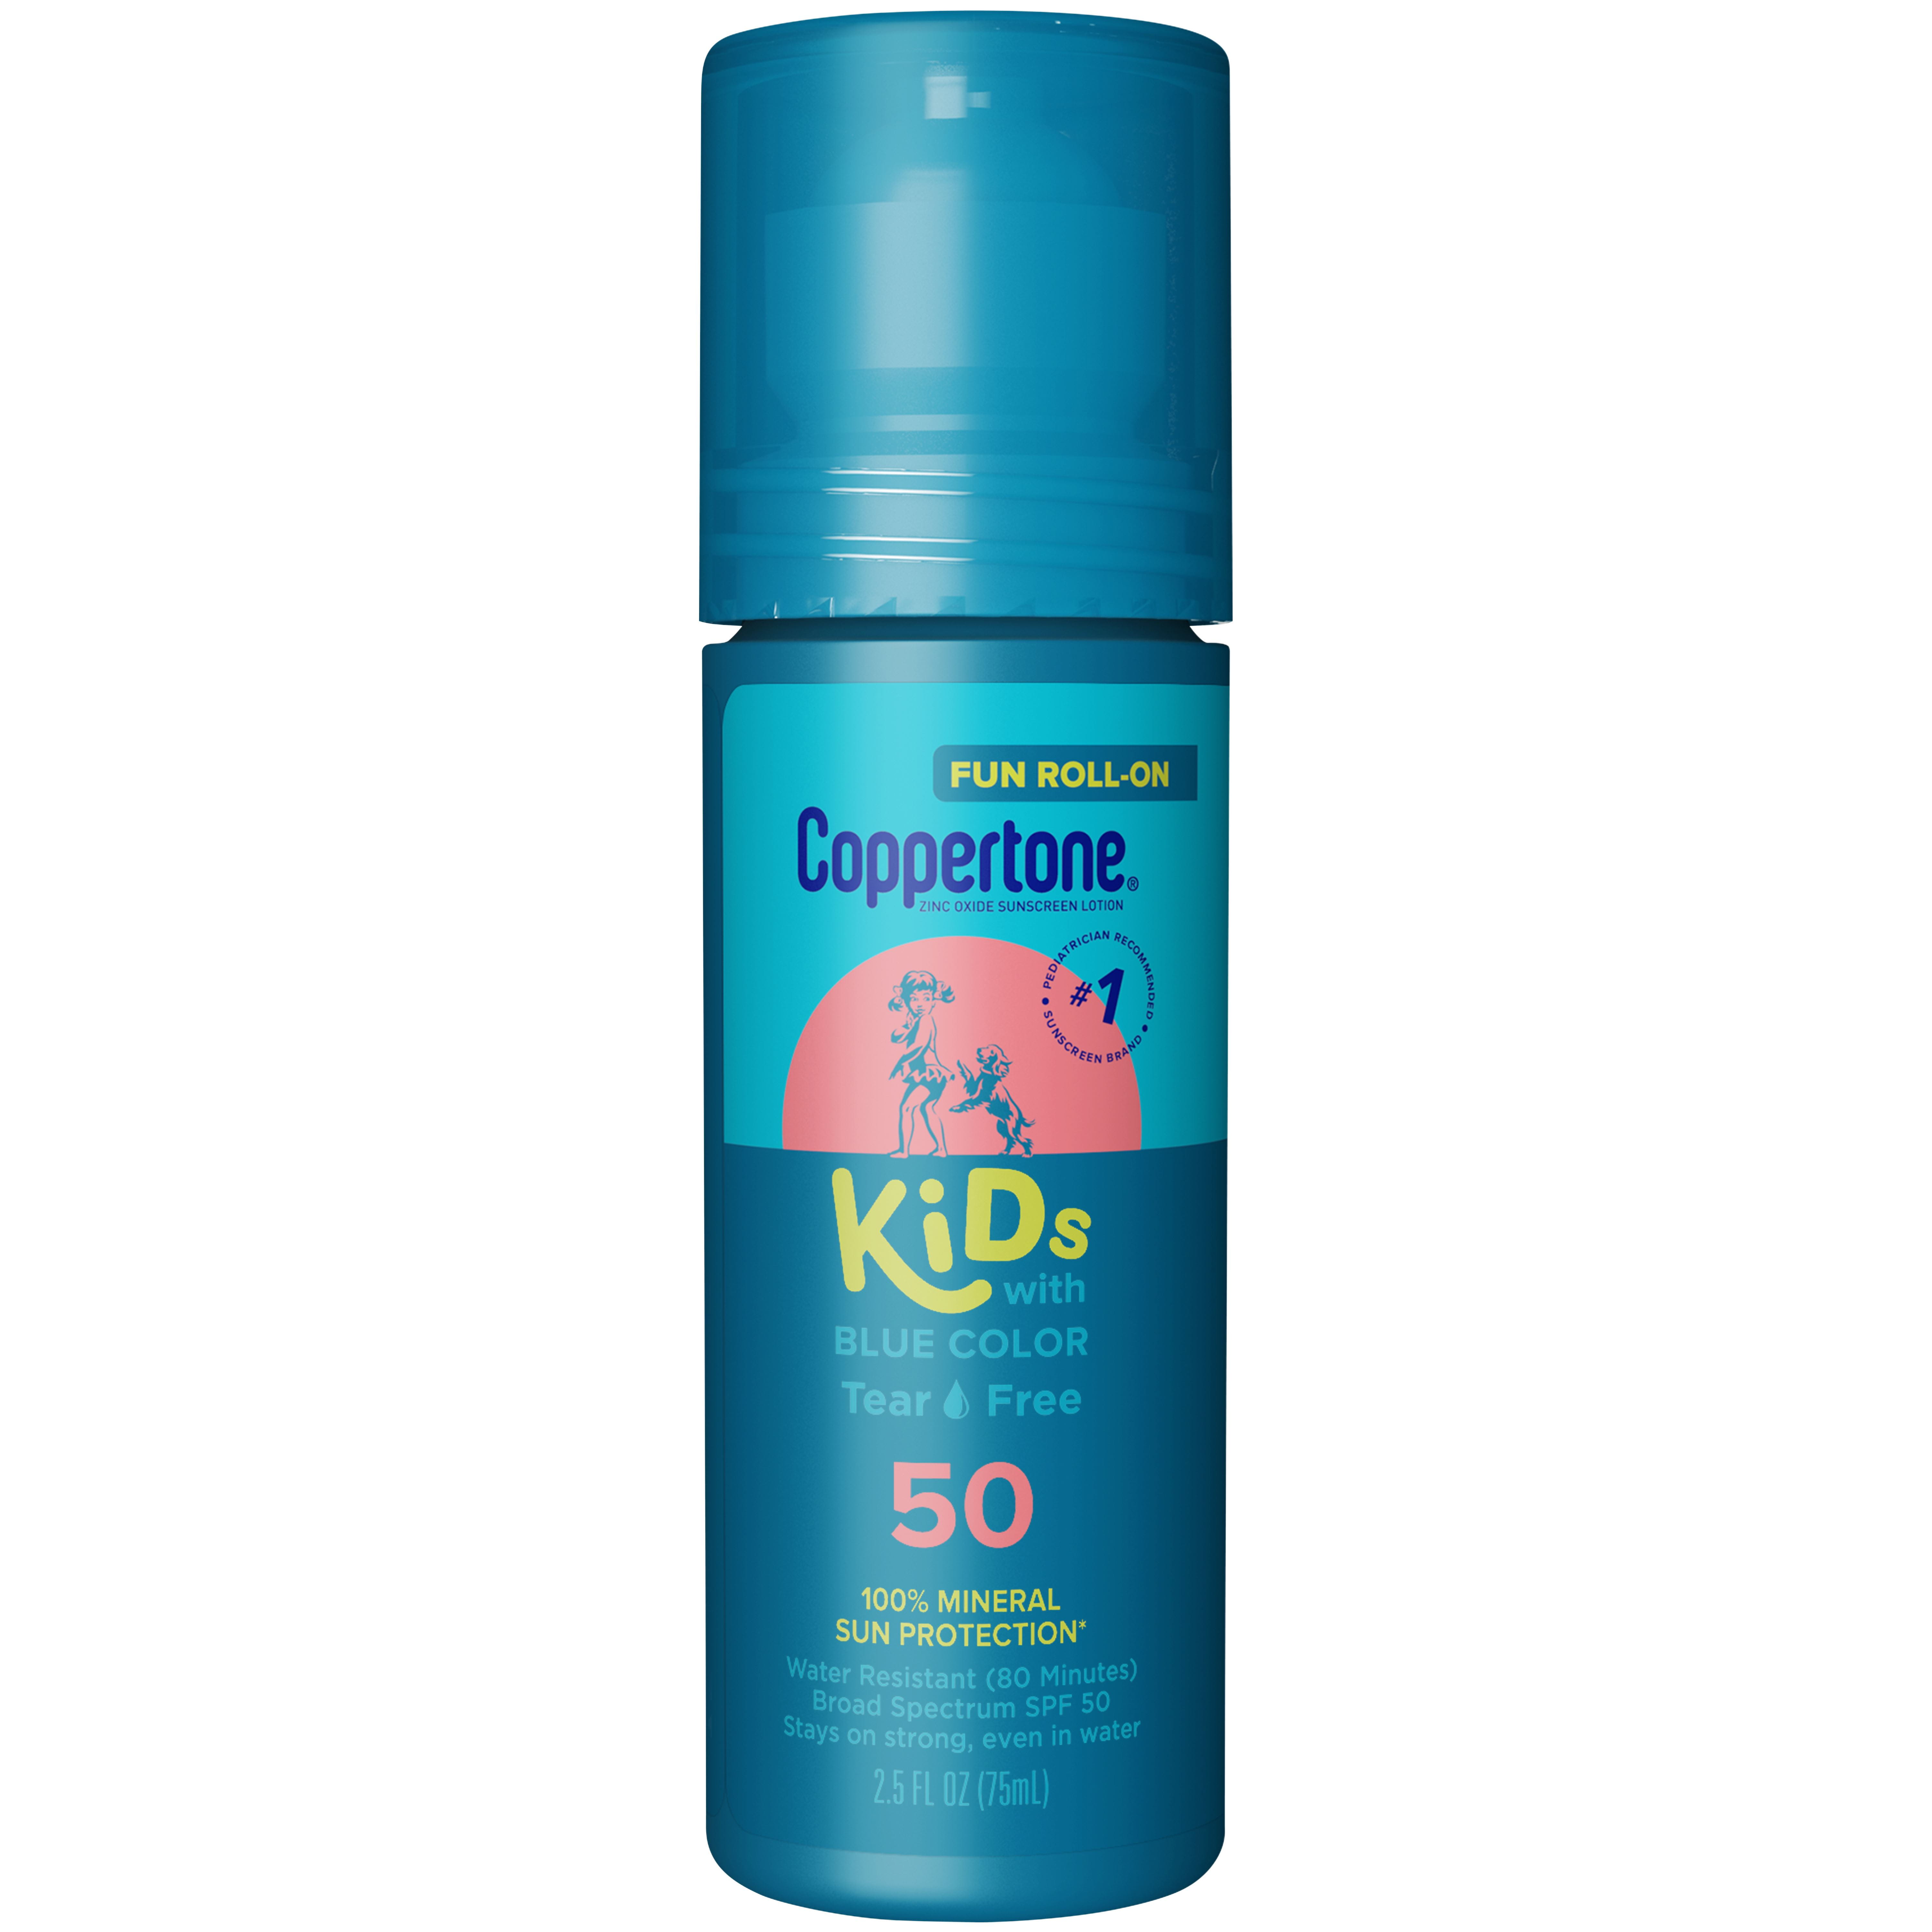 Kids Roll On SPF 50 Sunscreen Lotion